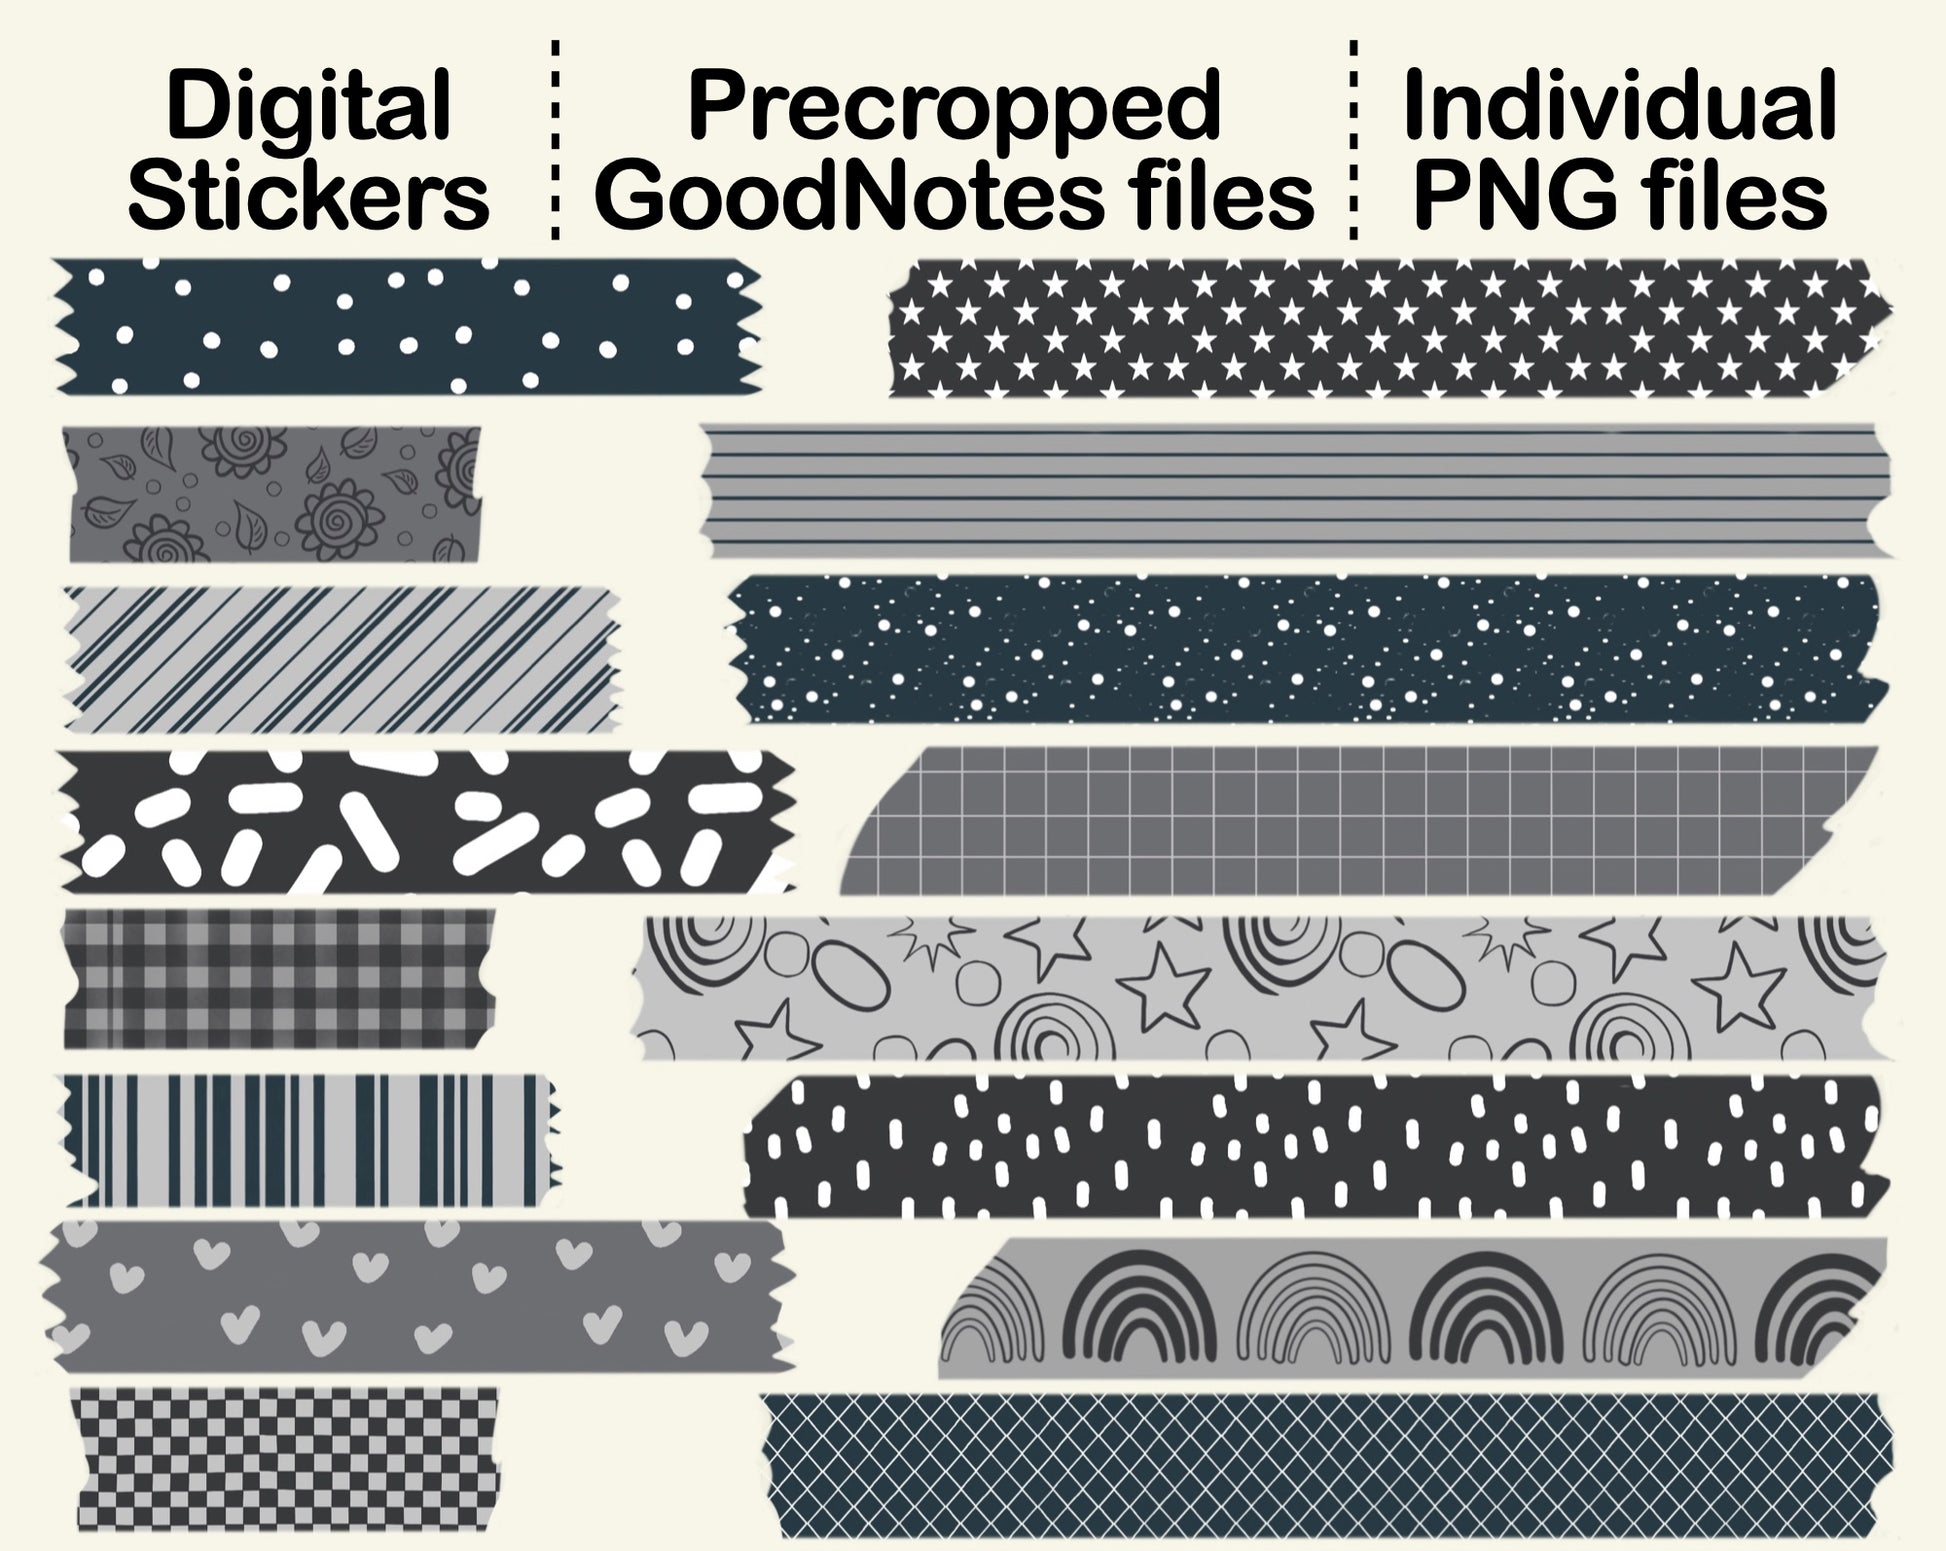 Digital Washi Tape Sticker Washi Tape Clipart Digital 